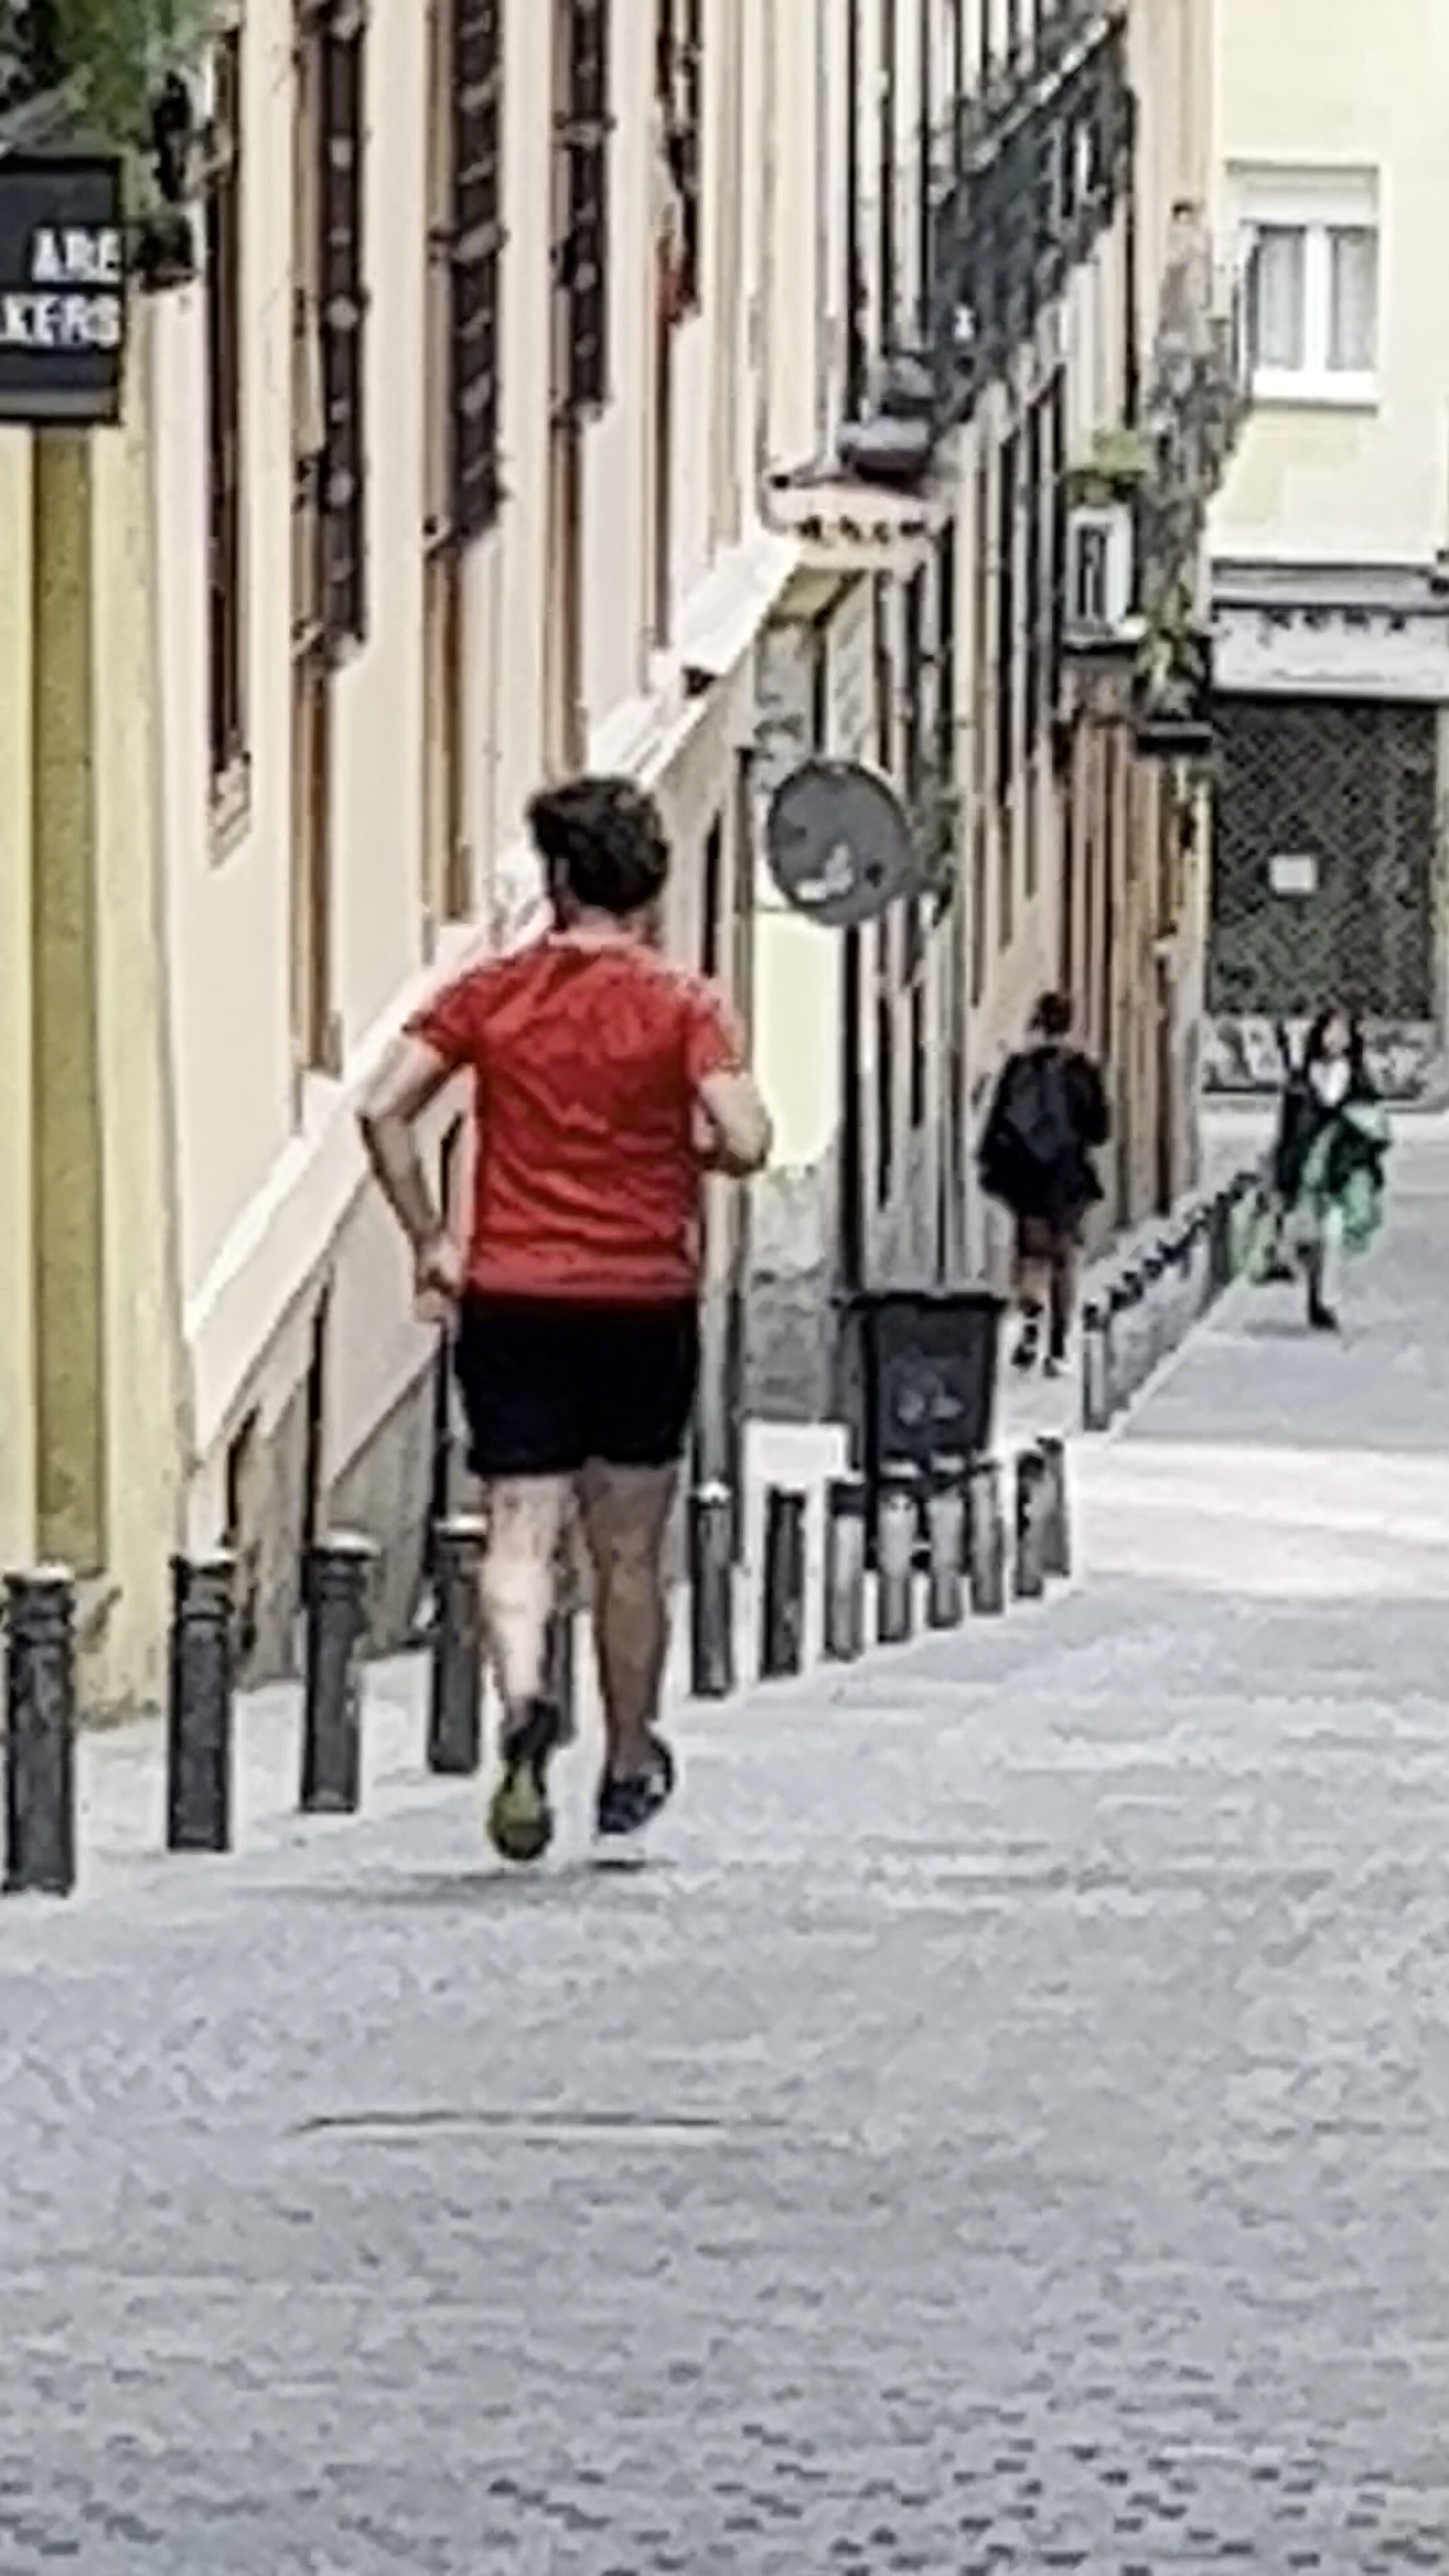 Spying Running Man's Butt